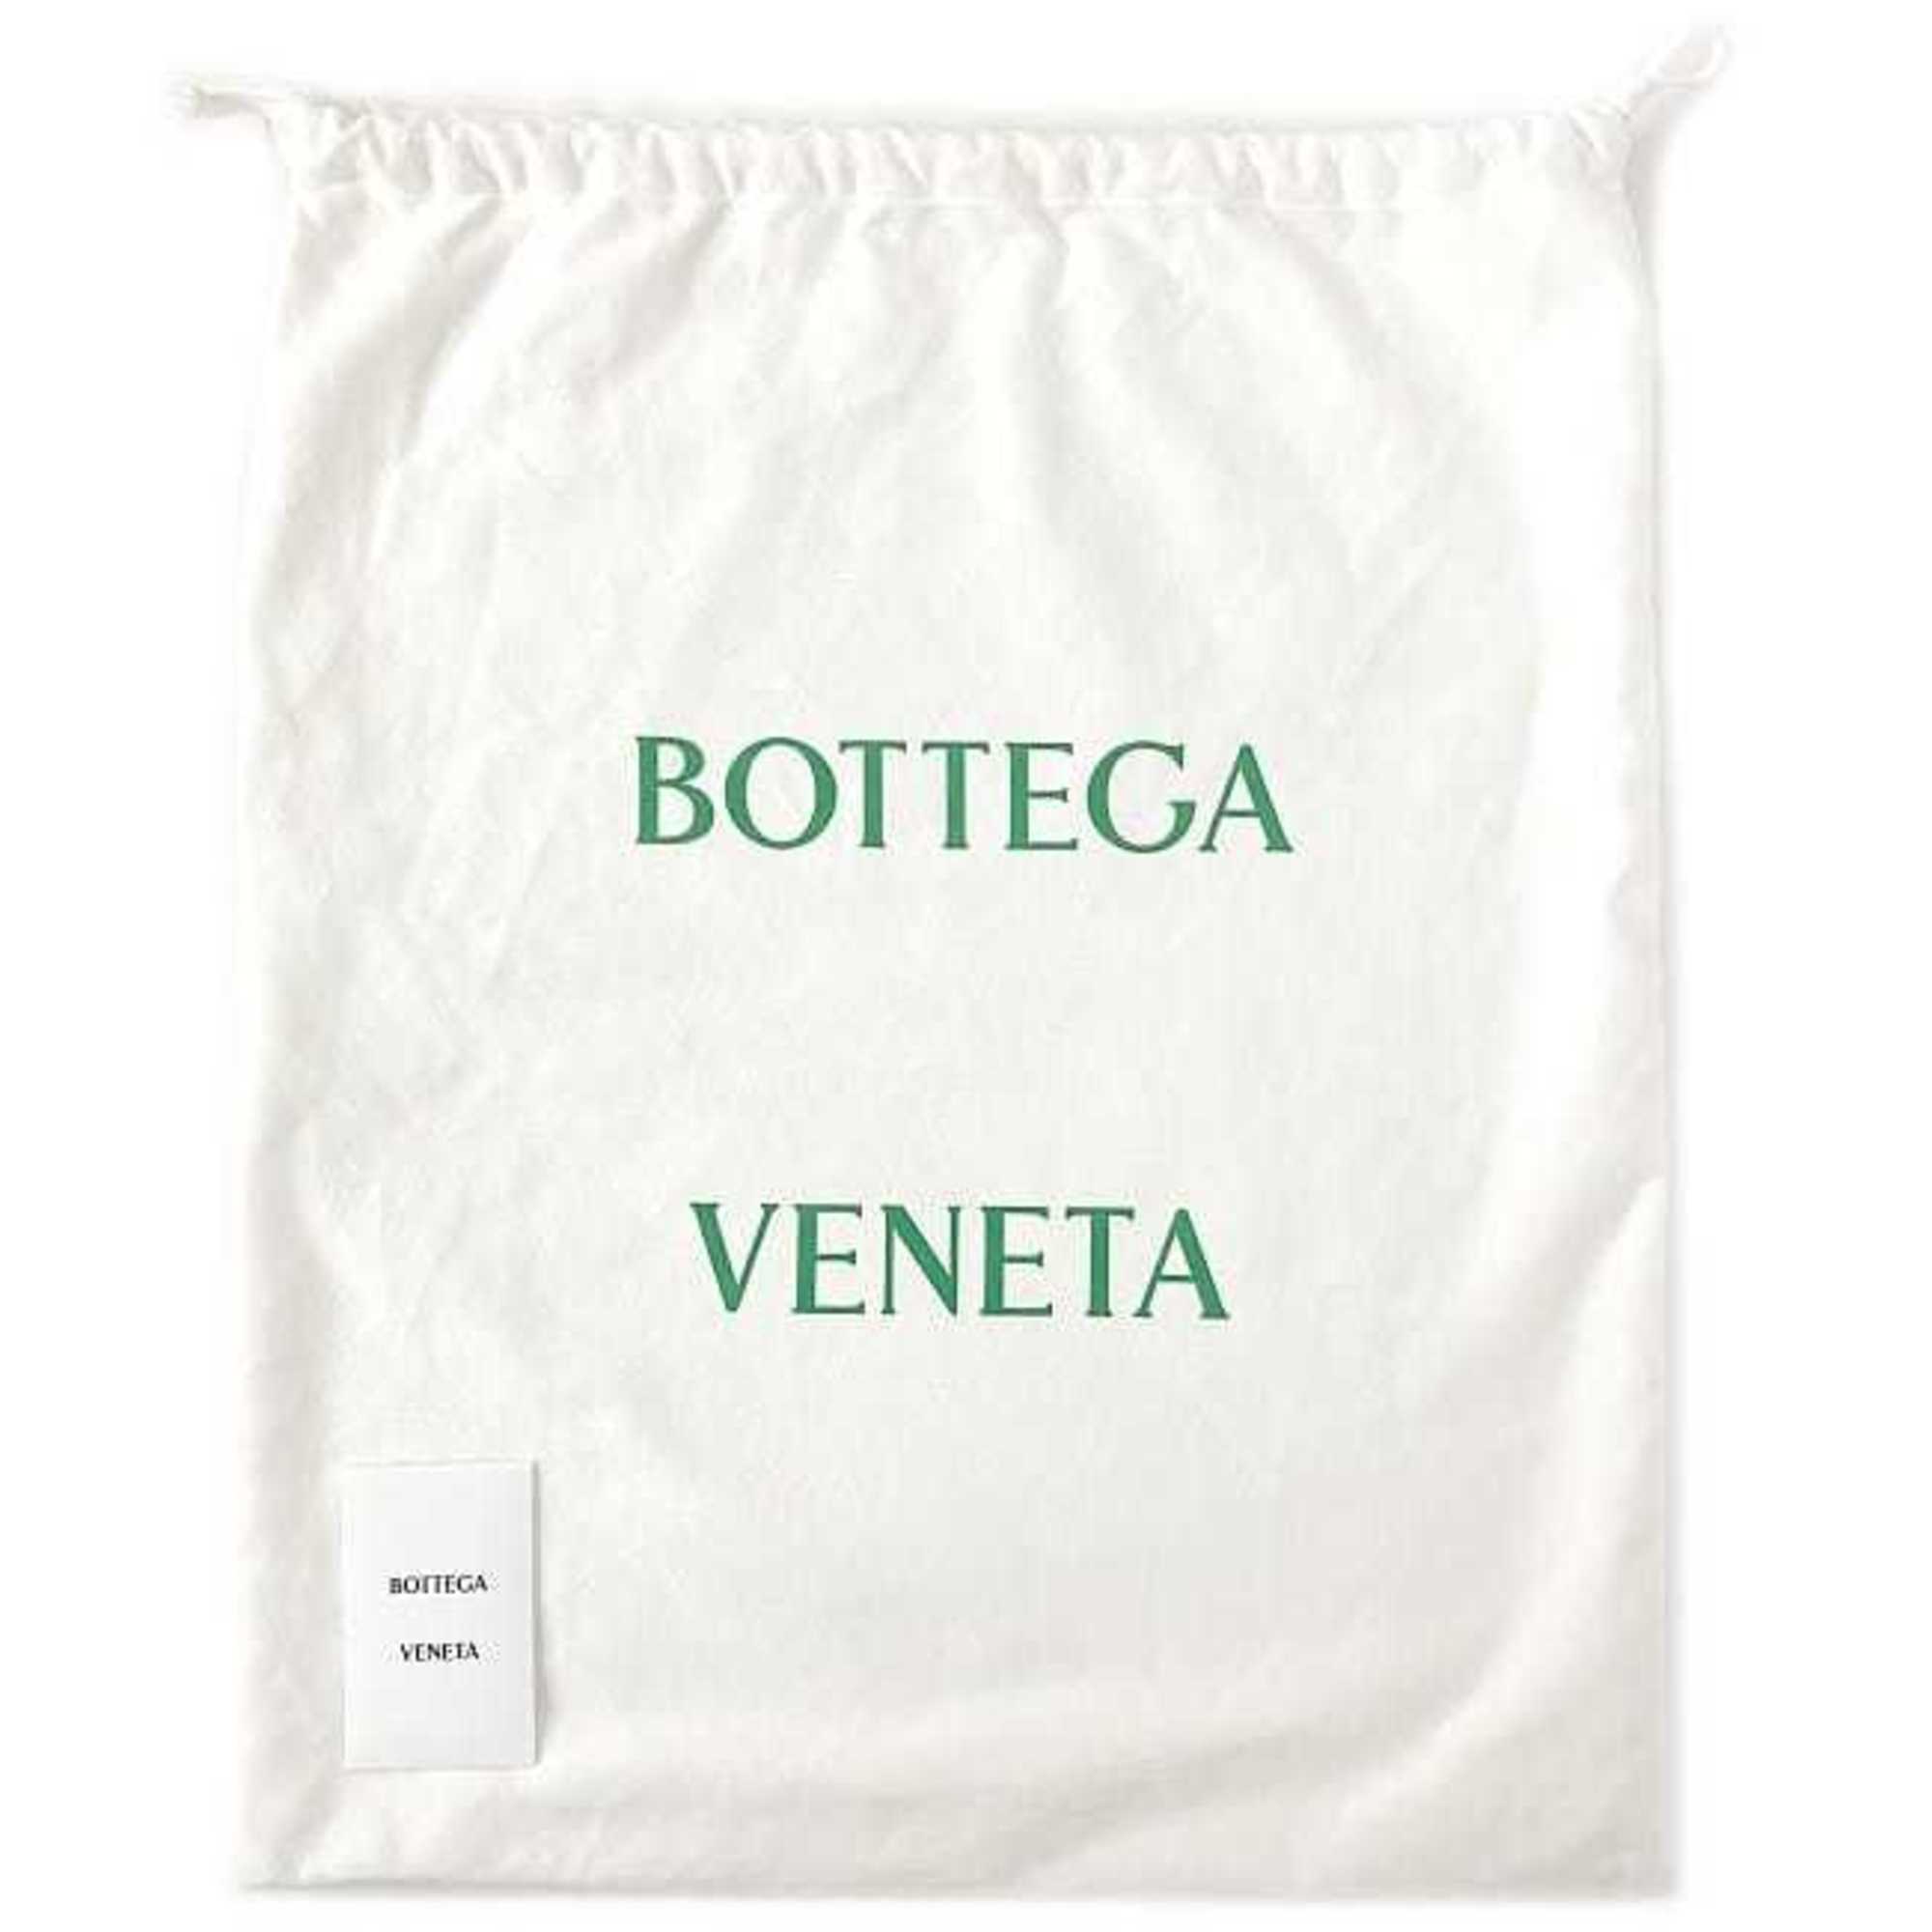 Bottega Veneta handbag cradle Bordeaux gold 680058 lambskin leather BOTTEGA VENETA side triangle flap